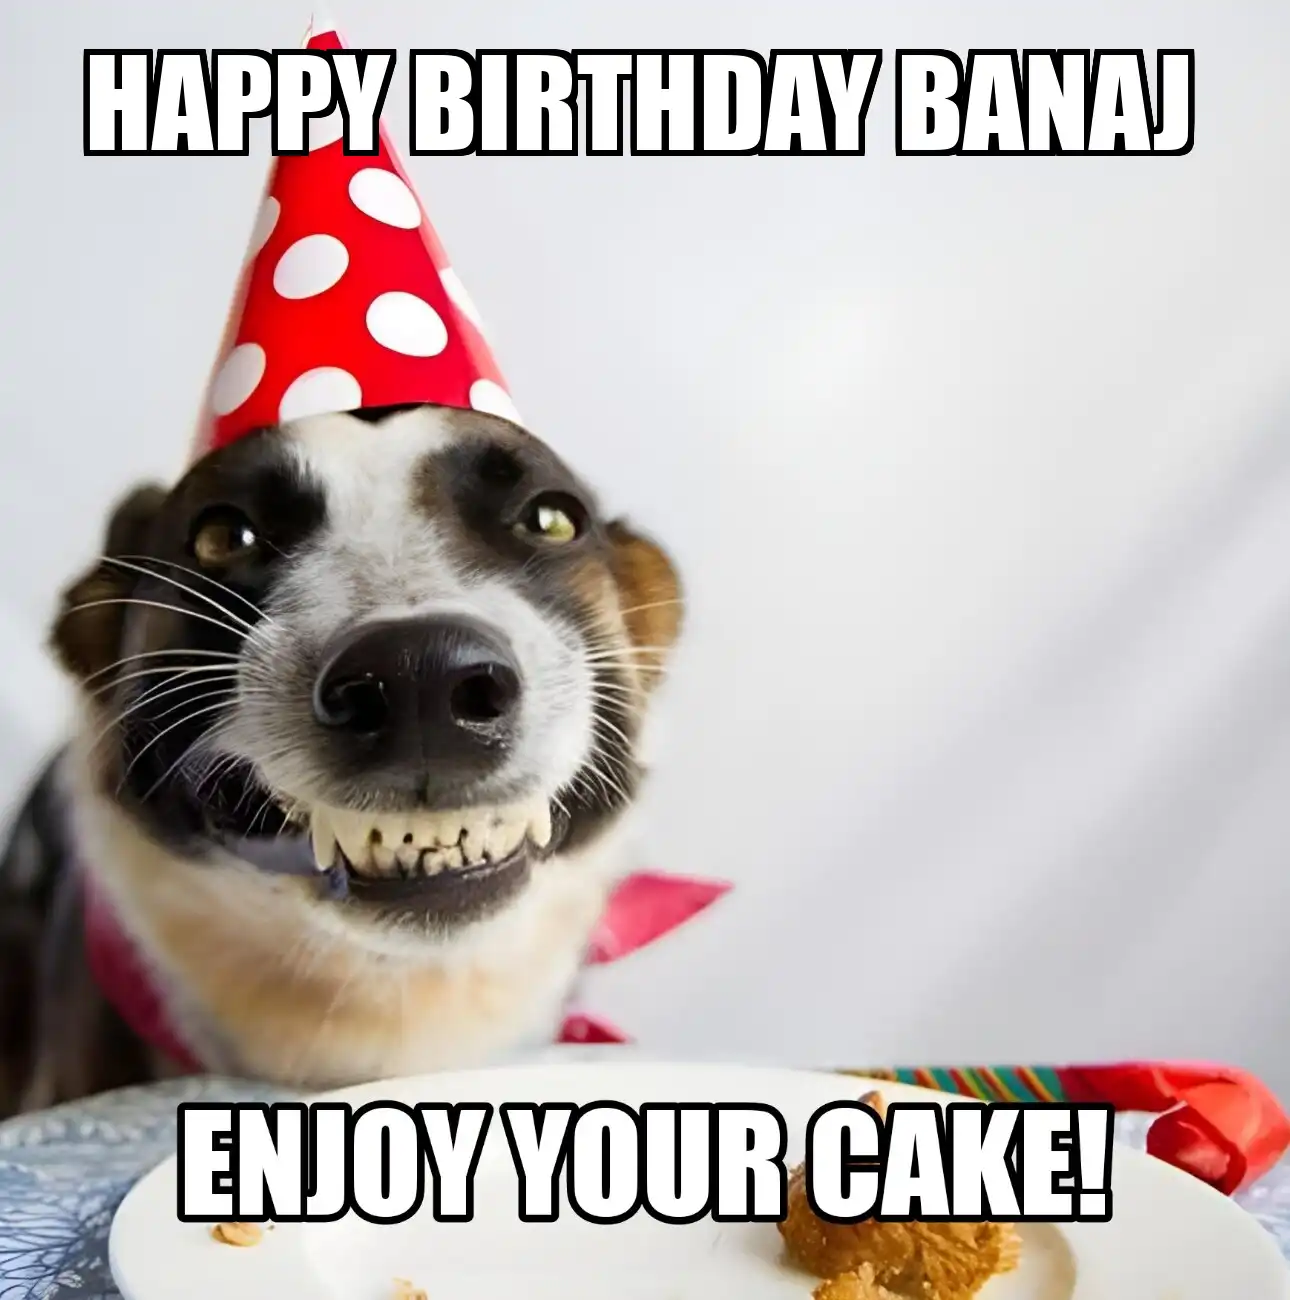 Happy Birthday Banaj Enjoy Your Cake Dog Meme